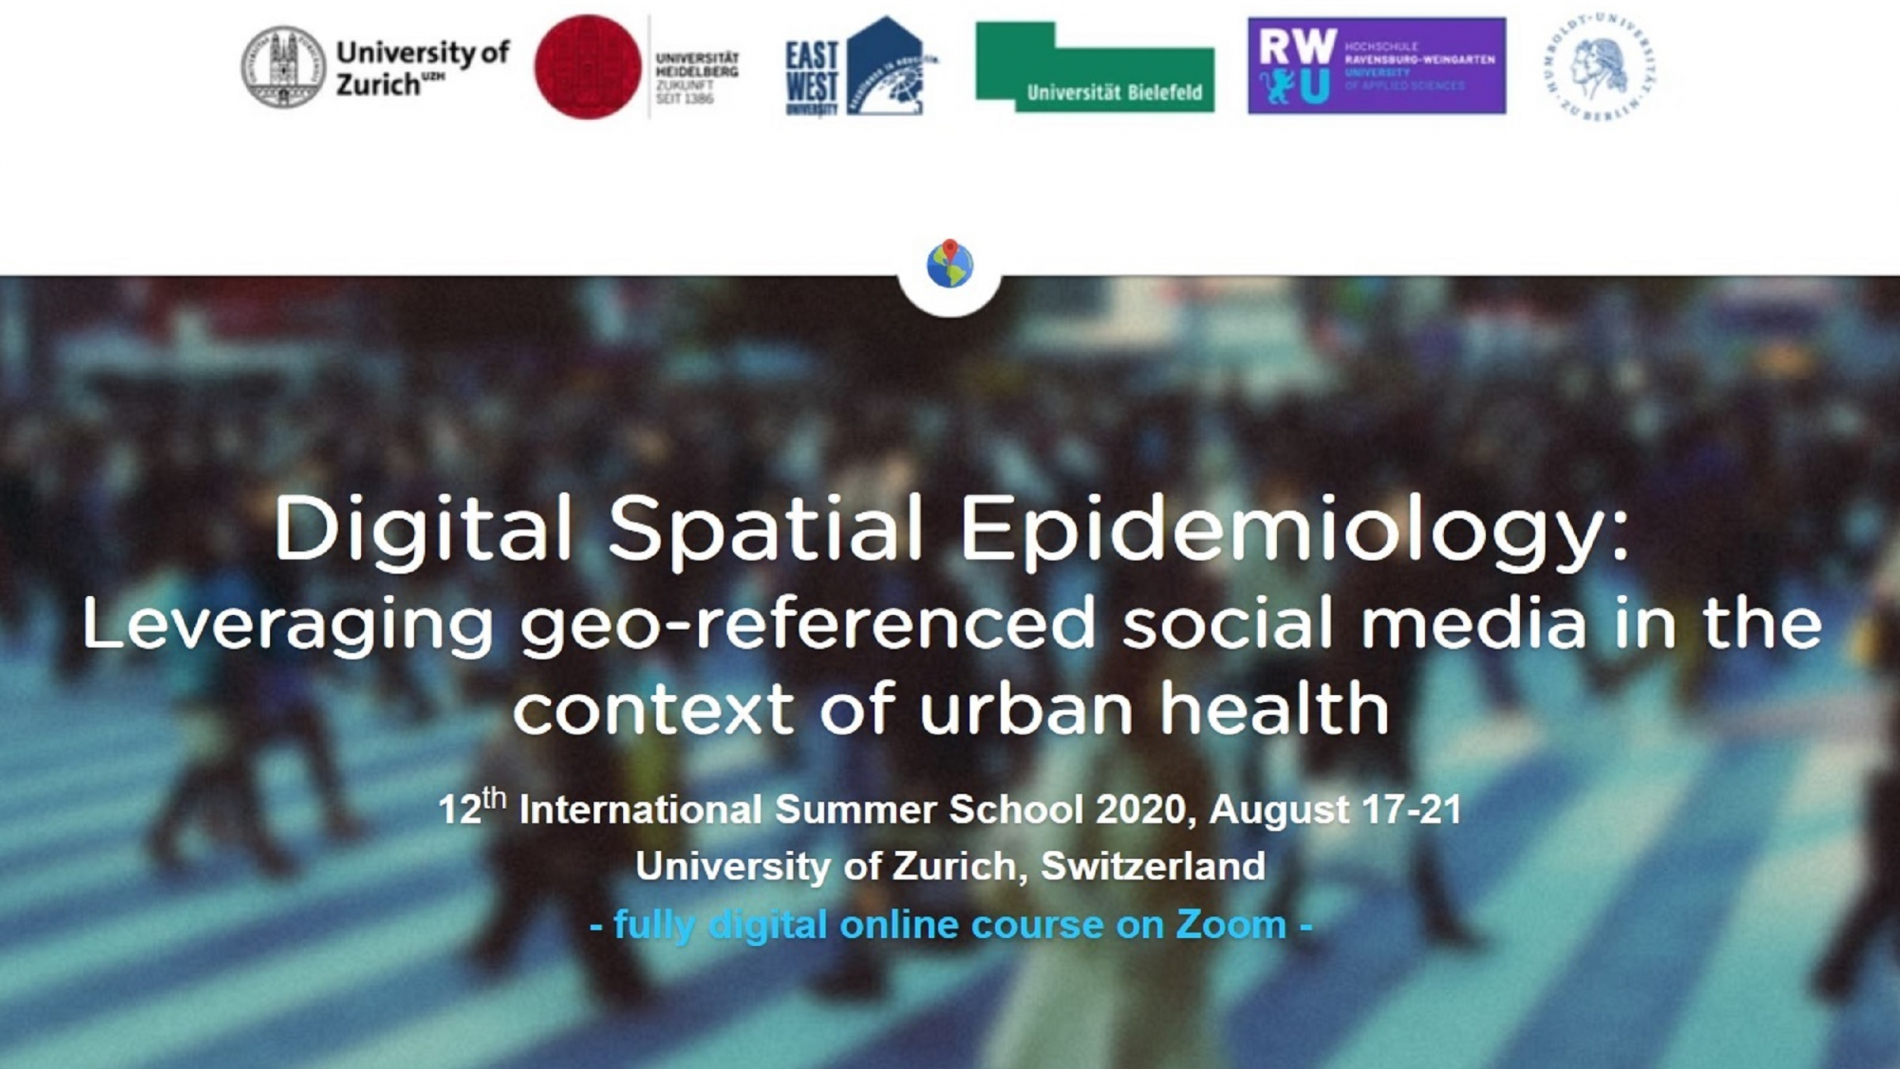 12th International Summer School: Digital Spatial Epidemiology